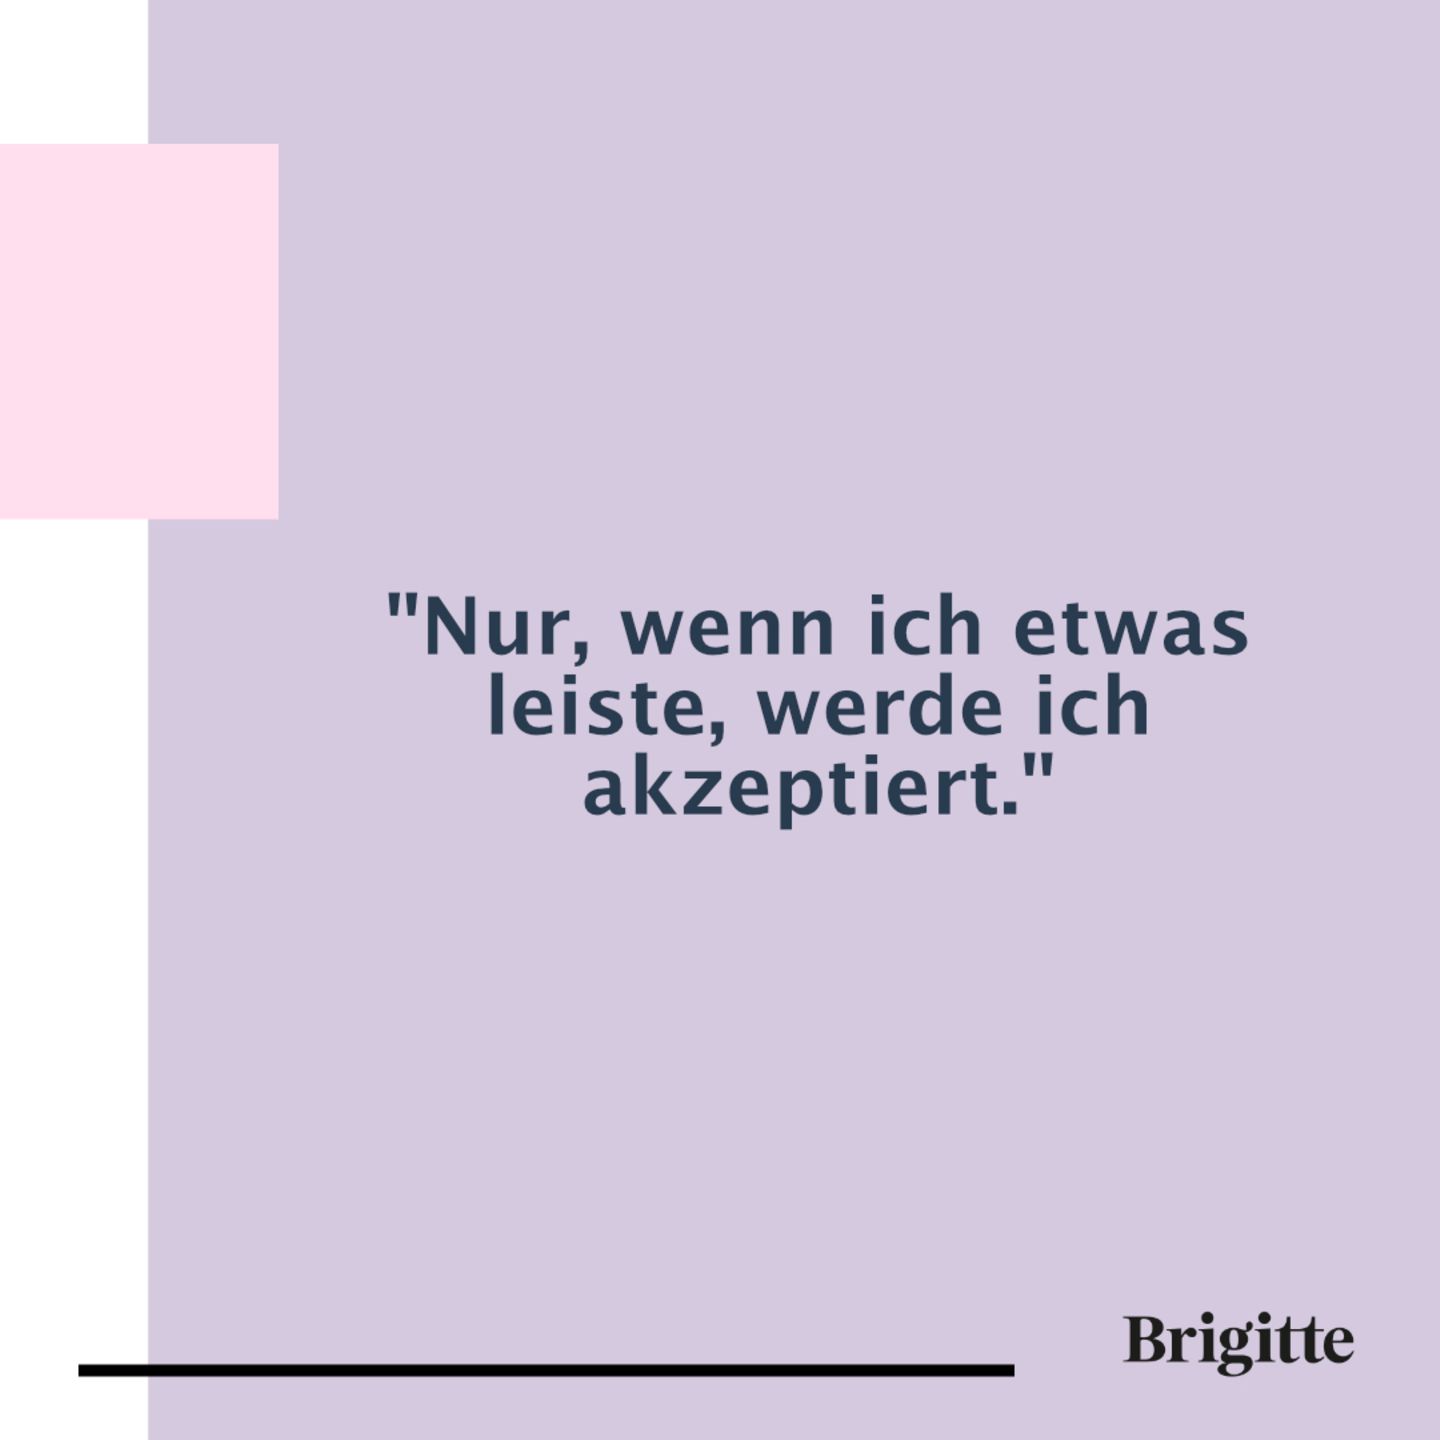 10 negative Glaubenssätze und positive Alternativen | BRIGITTE.de